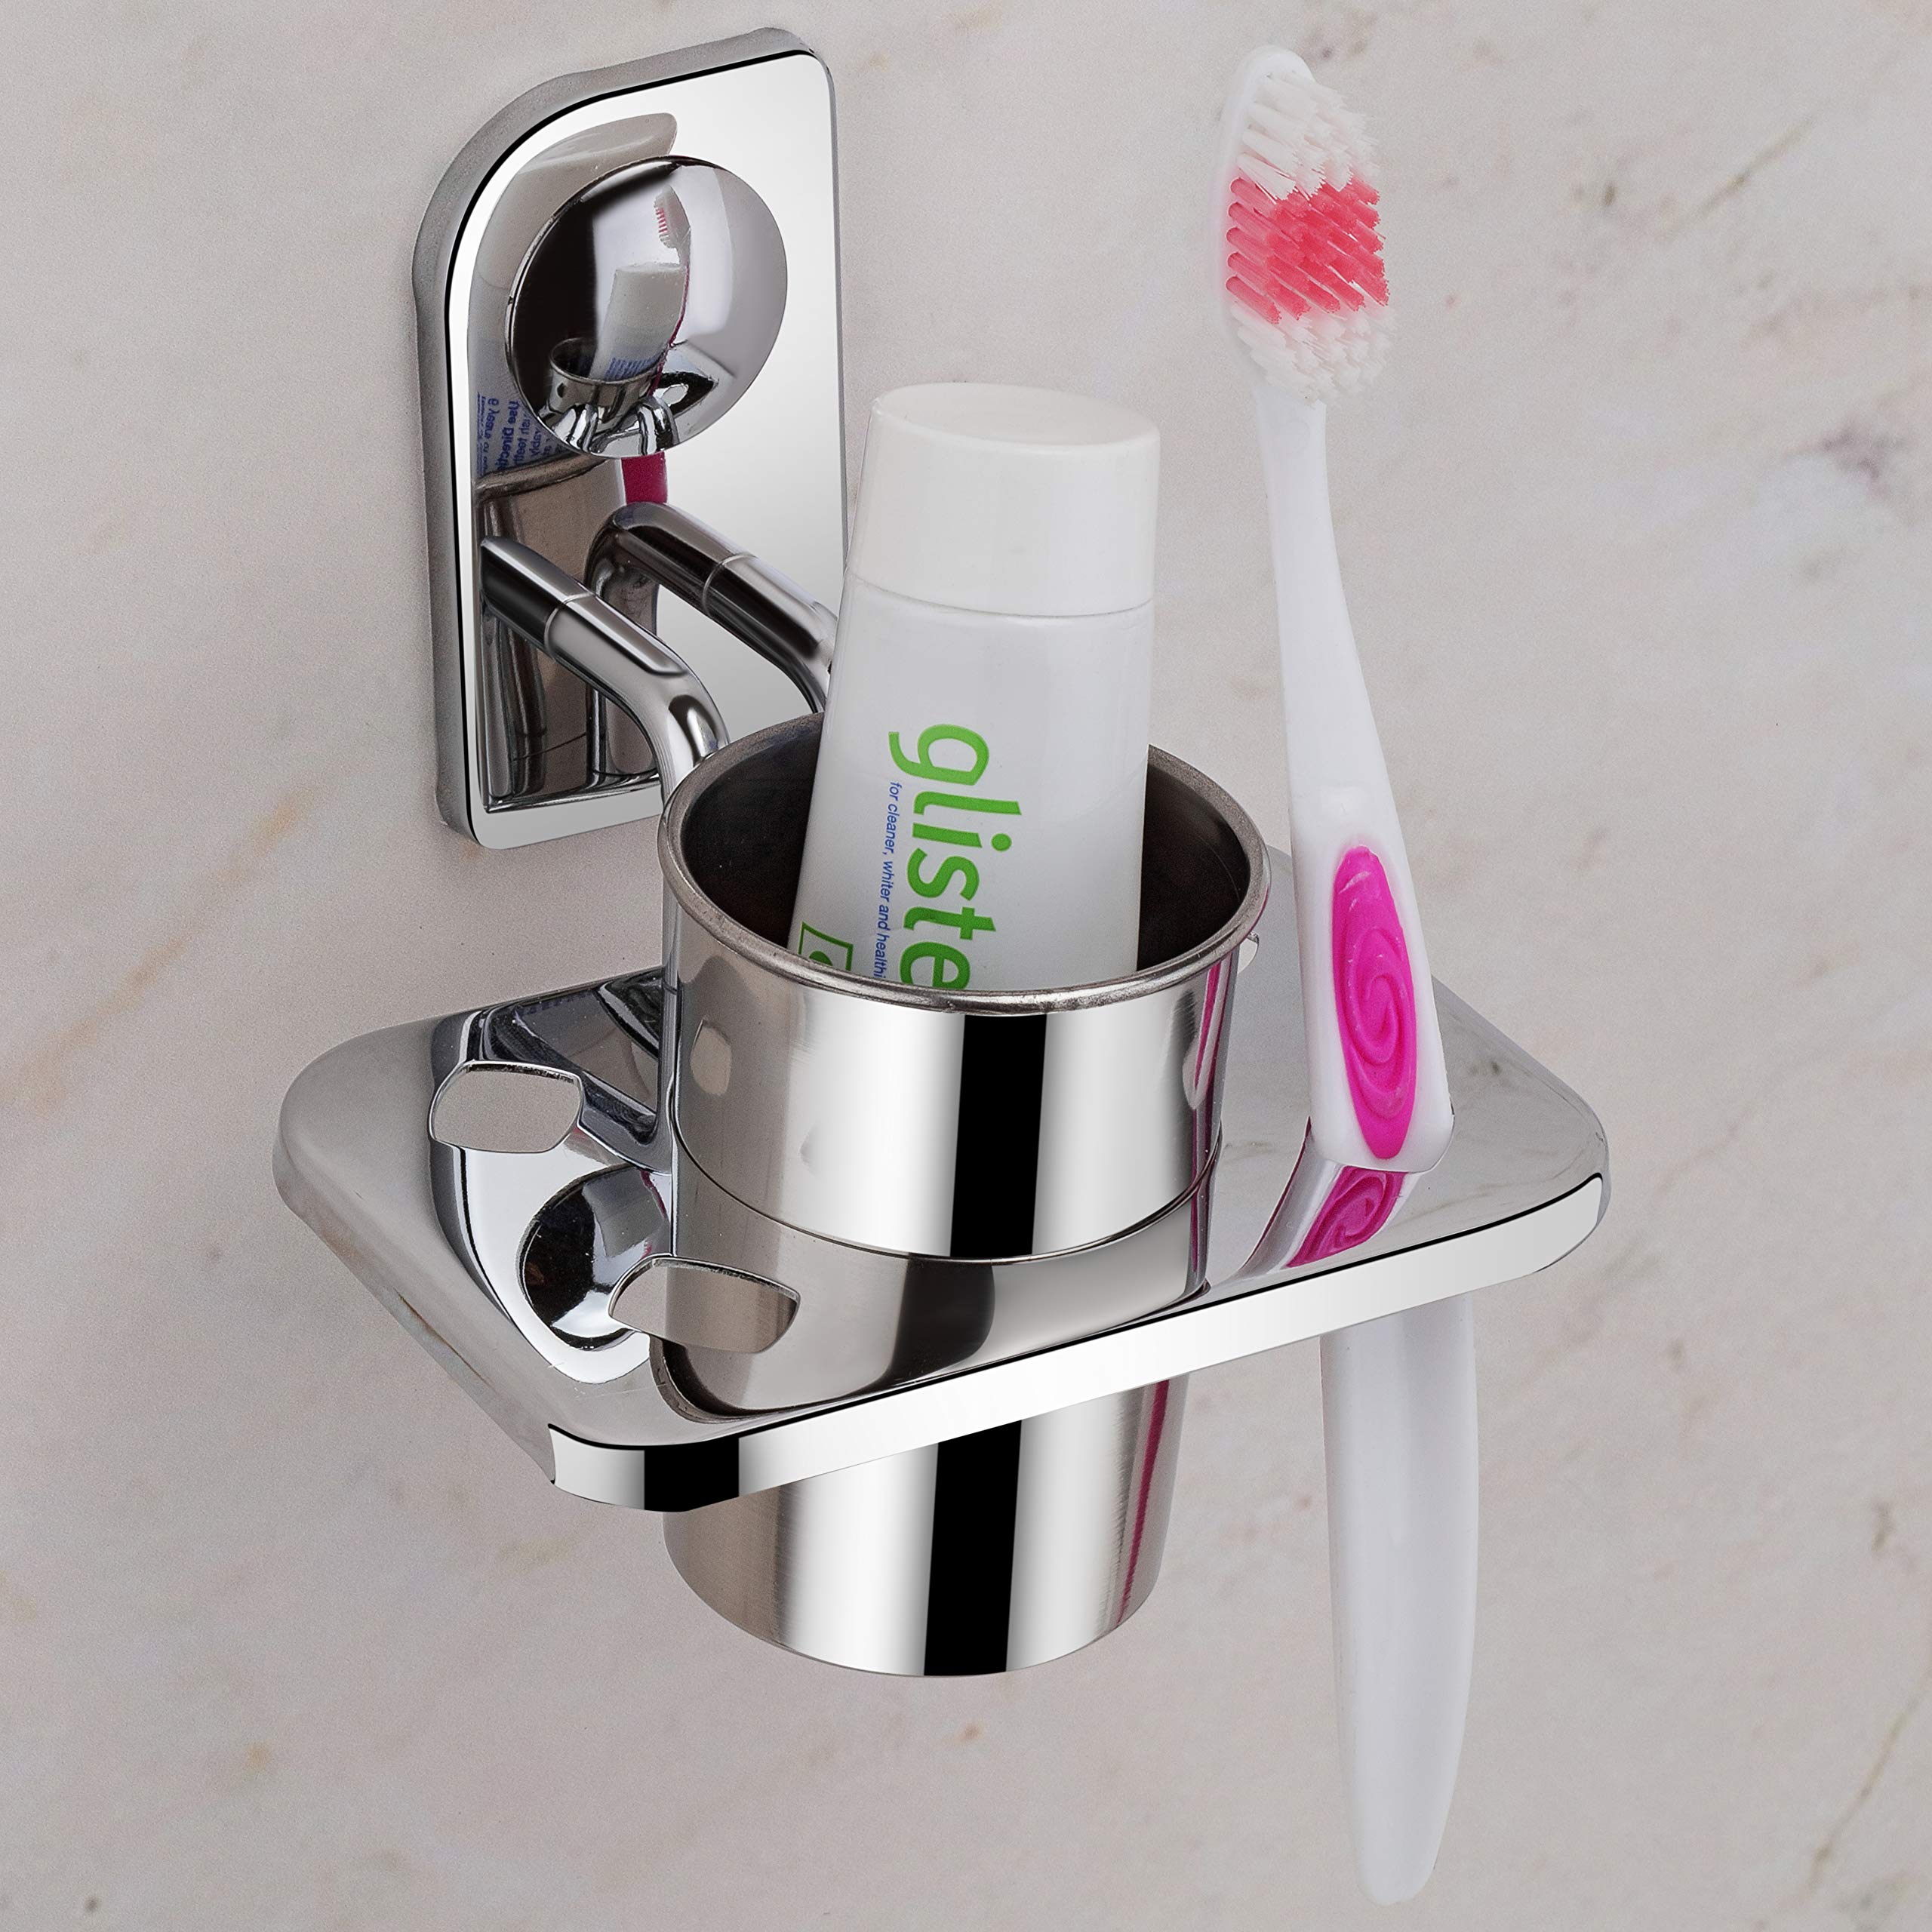 Plantex Dream High Grade Stainless Steel Tooth Brush Holder/Tumbler Holder/Bathroom Accessories (Chrome) - Pack of 4